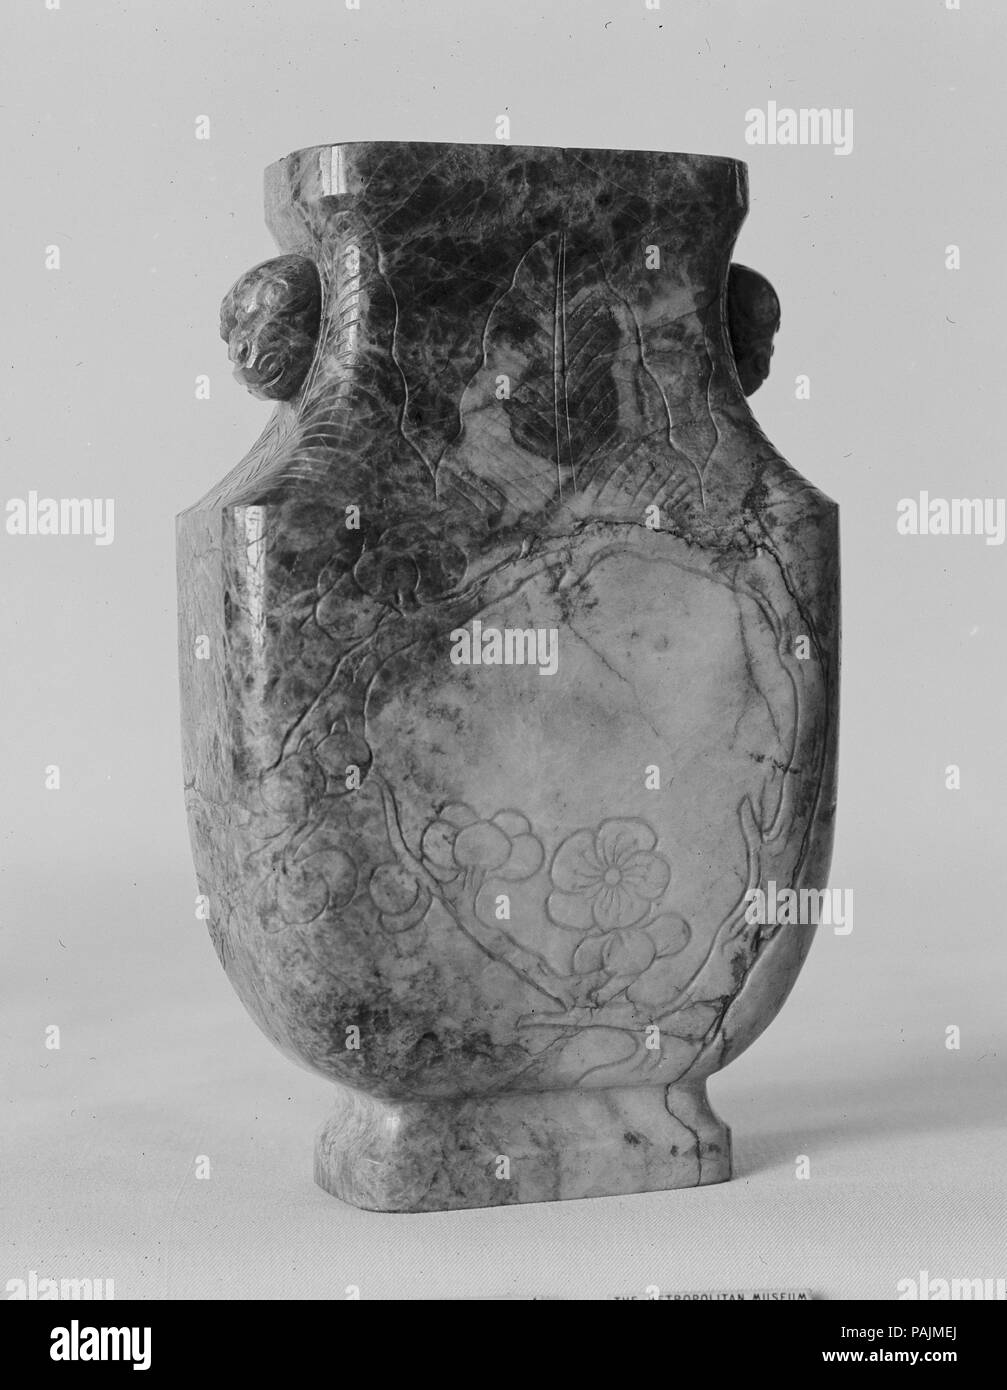 Vase. Culture: China. Dimensions: H. 4 5/16 in. (11 cm); W. 3 1/8 in. (7.9 cm); L. 1 1/2 in. (3.8 cm). Museum: Metropolitan Museum of Art, New York, USA. Stock Photo